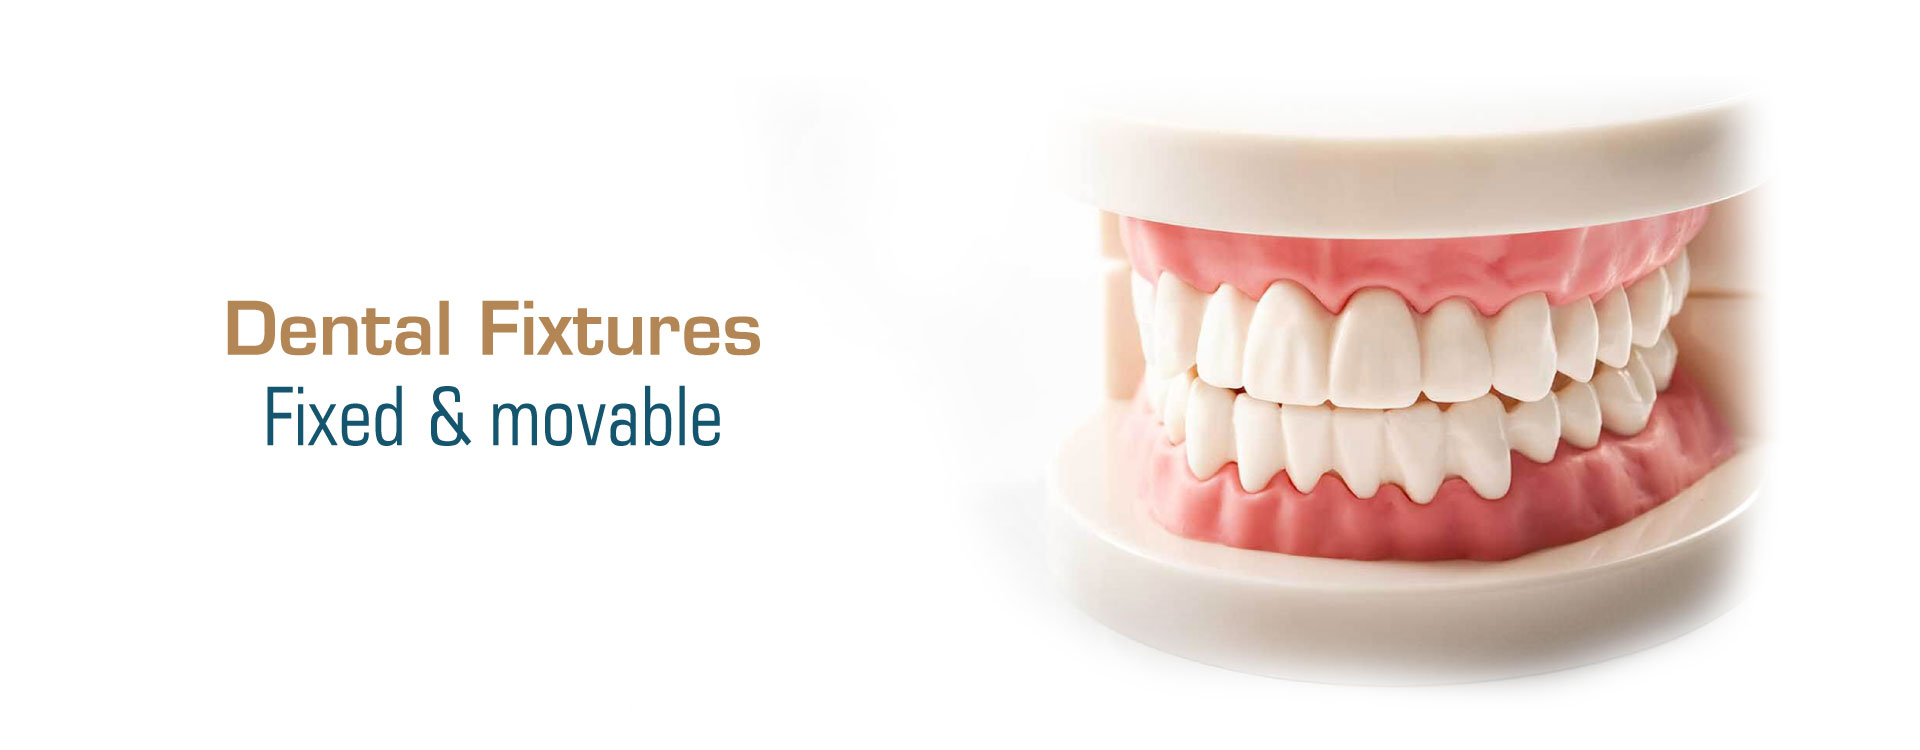 Dental fixtures - Skin and Teeth Medical Center - Ajman - UAE